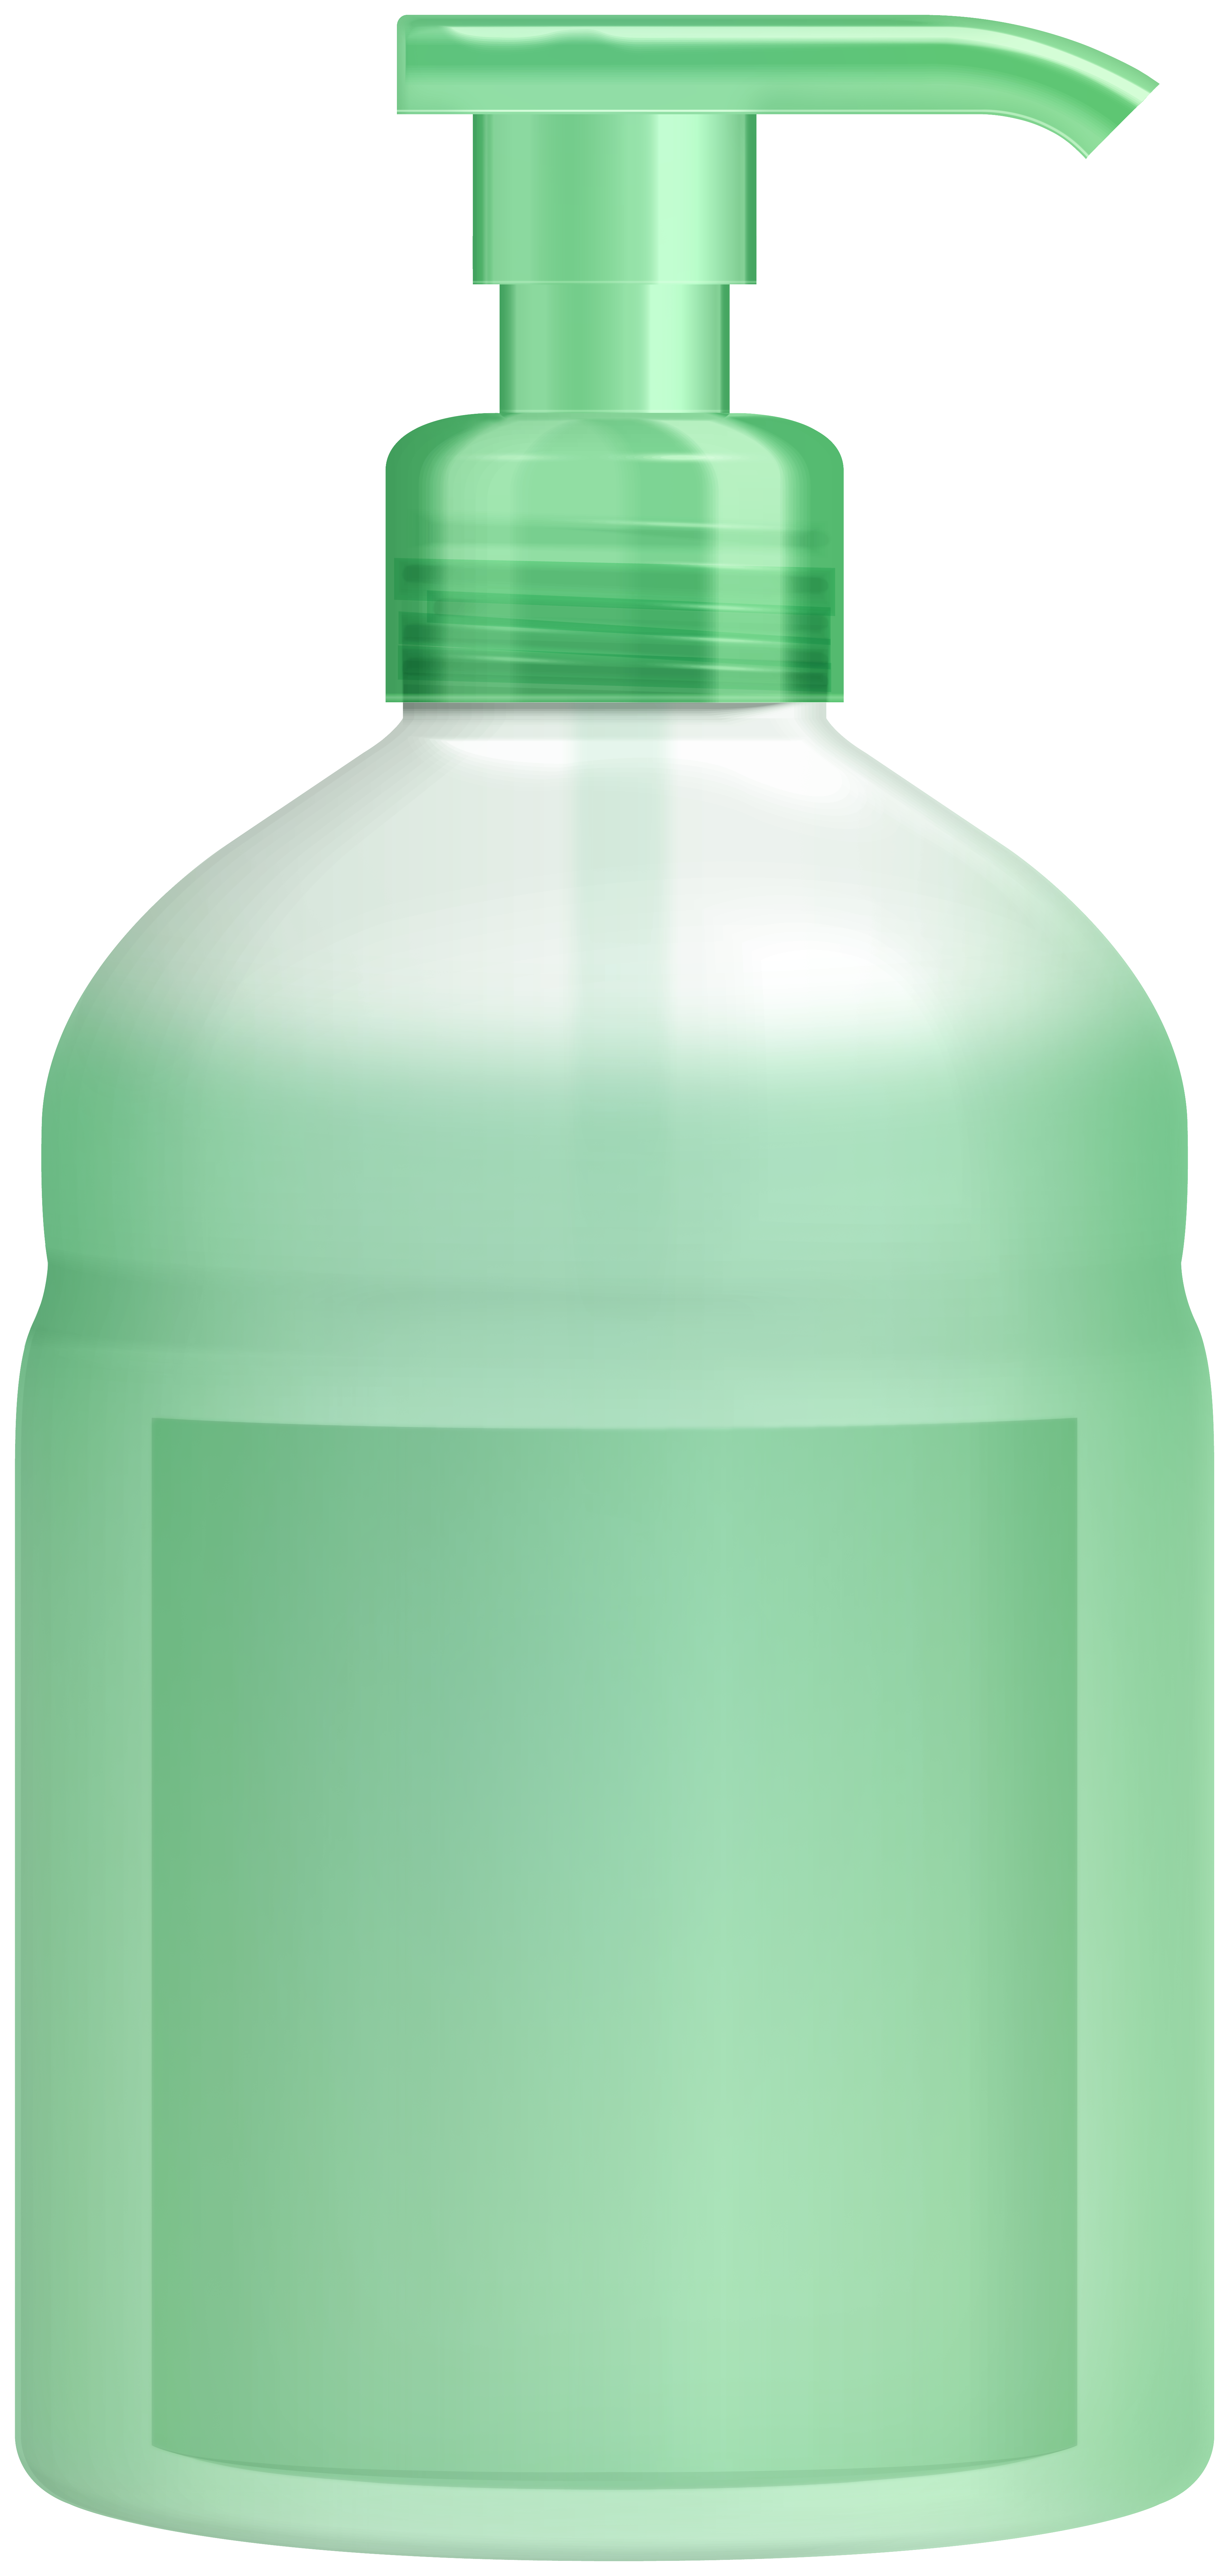 Green Hand Sanitizer PNG Clipart - Best WEB Clipart